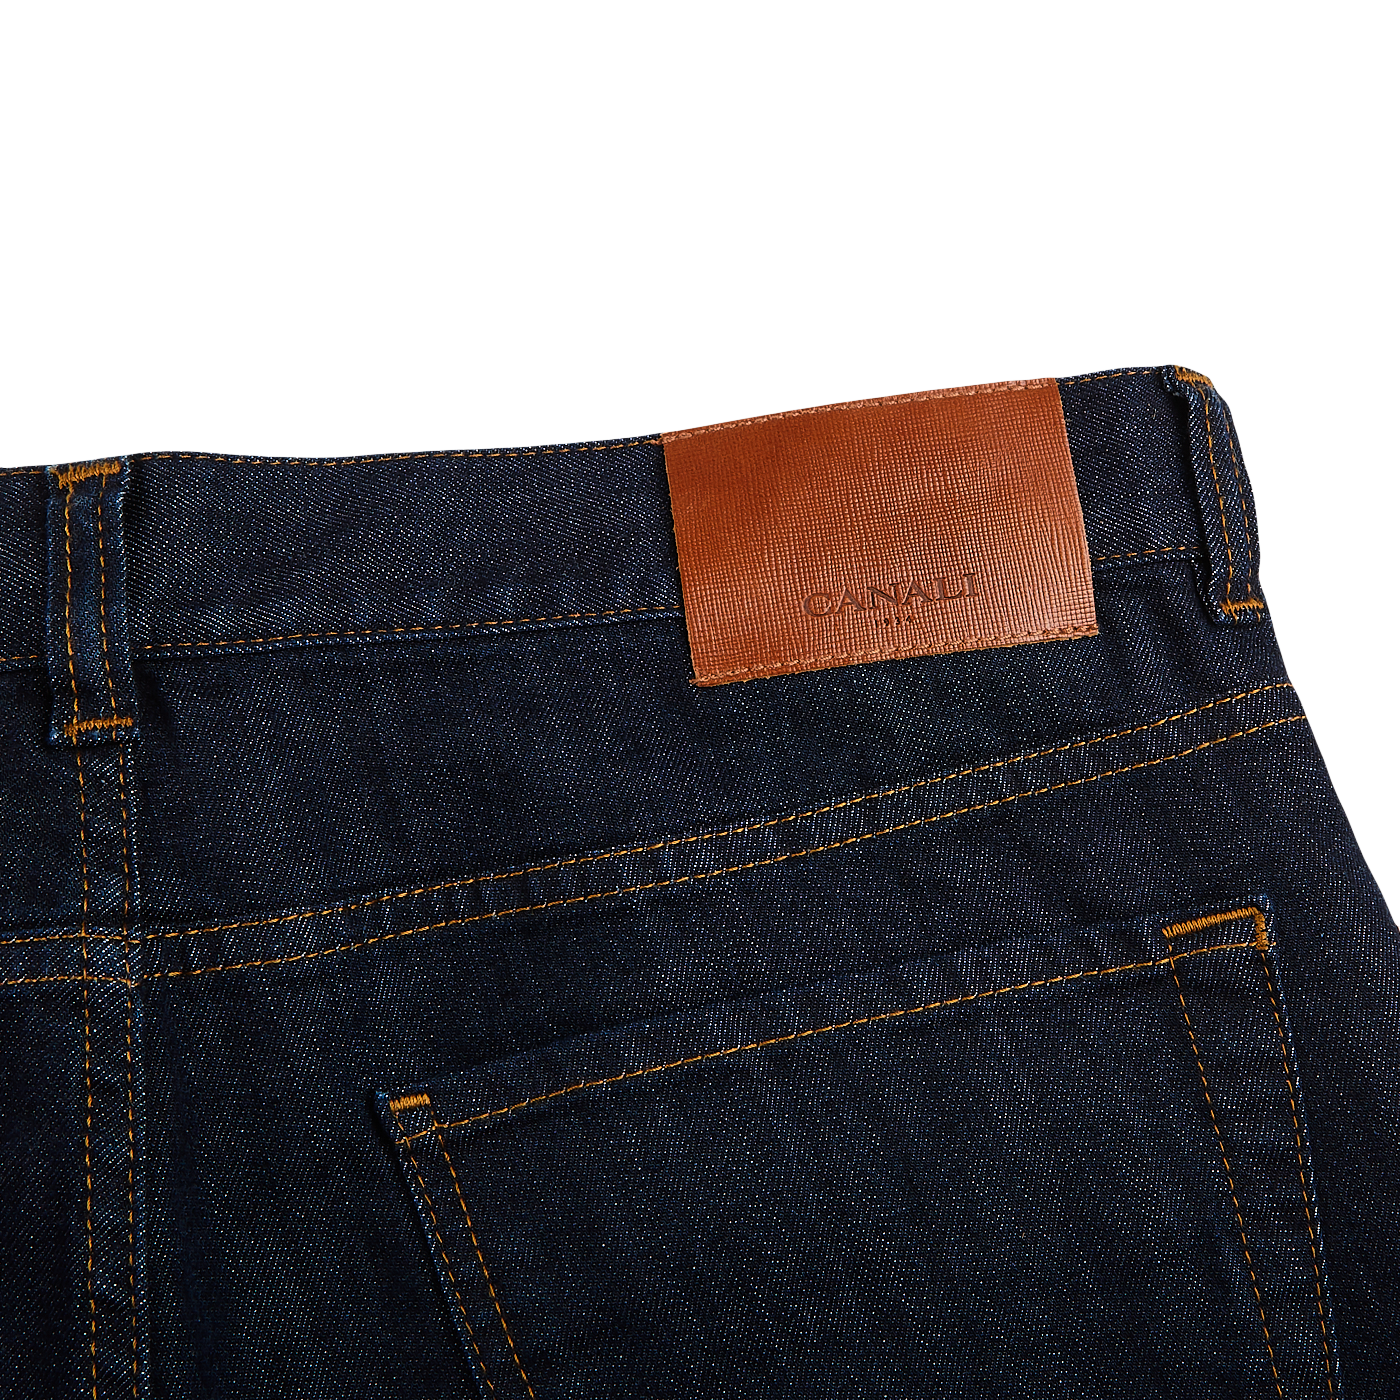 Canali Dark Indigo Cotton Stretch Jeans Tag